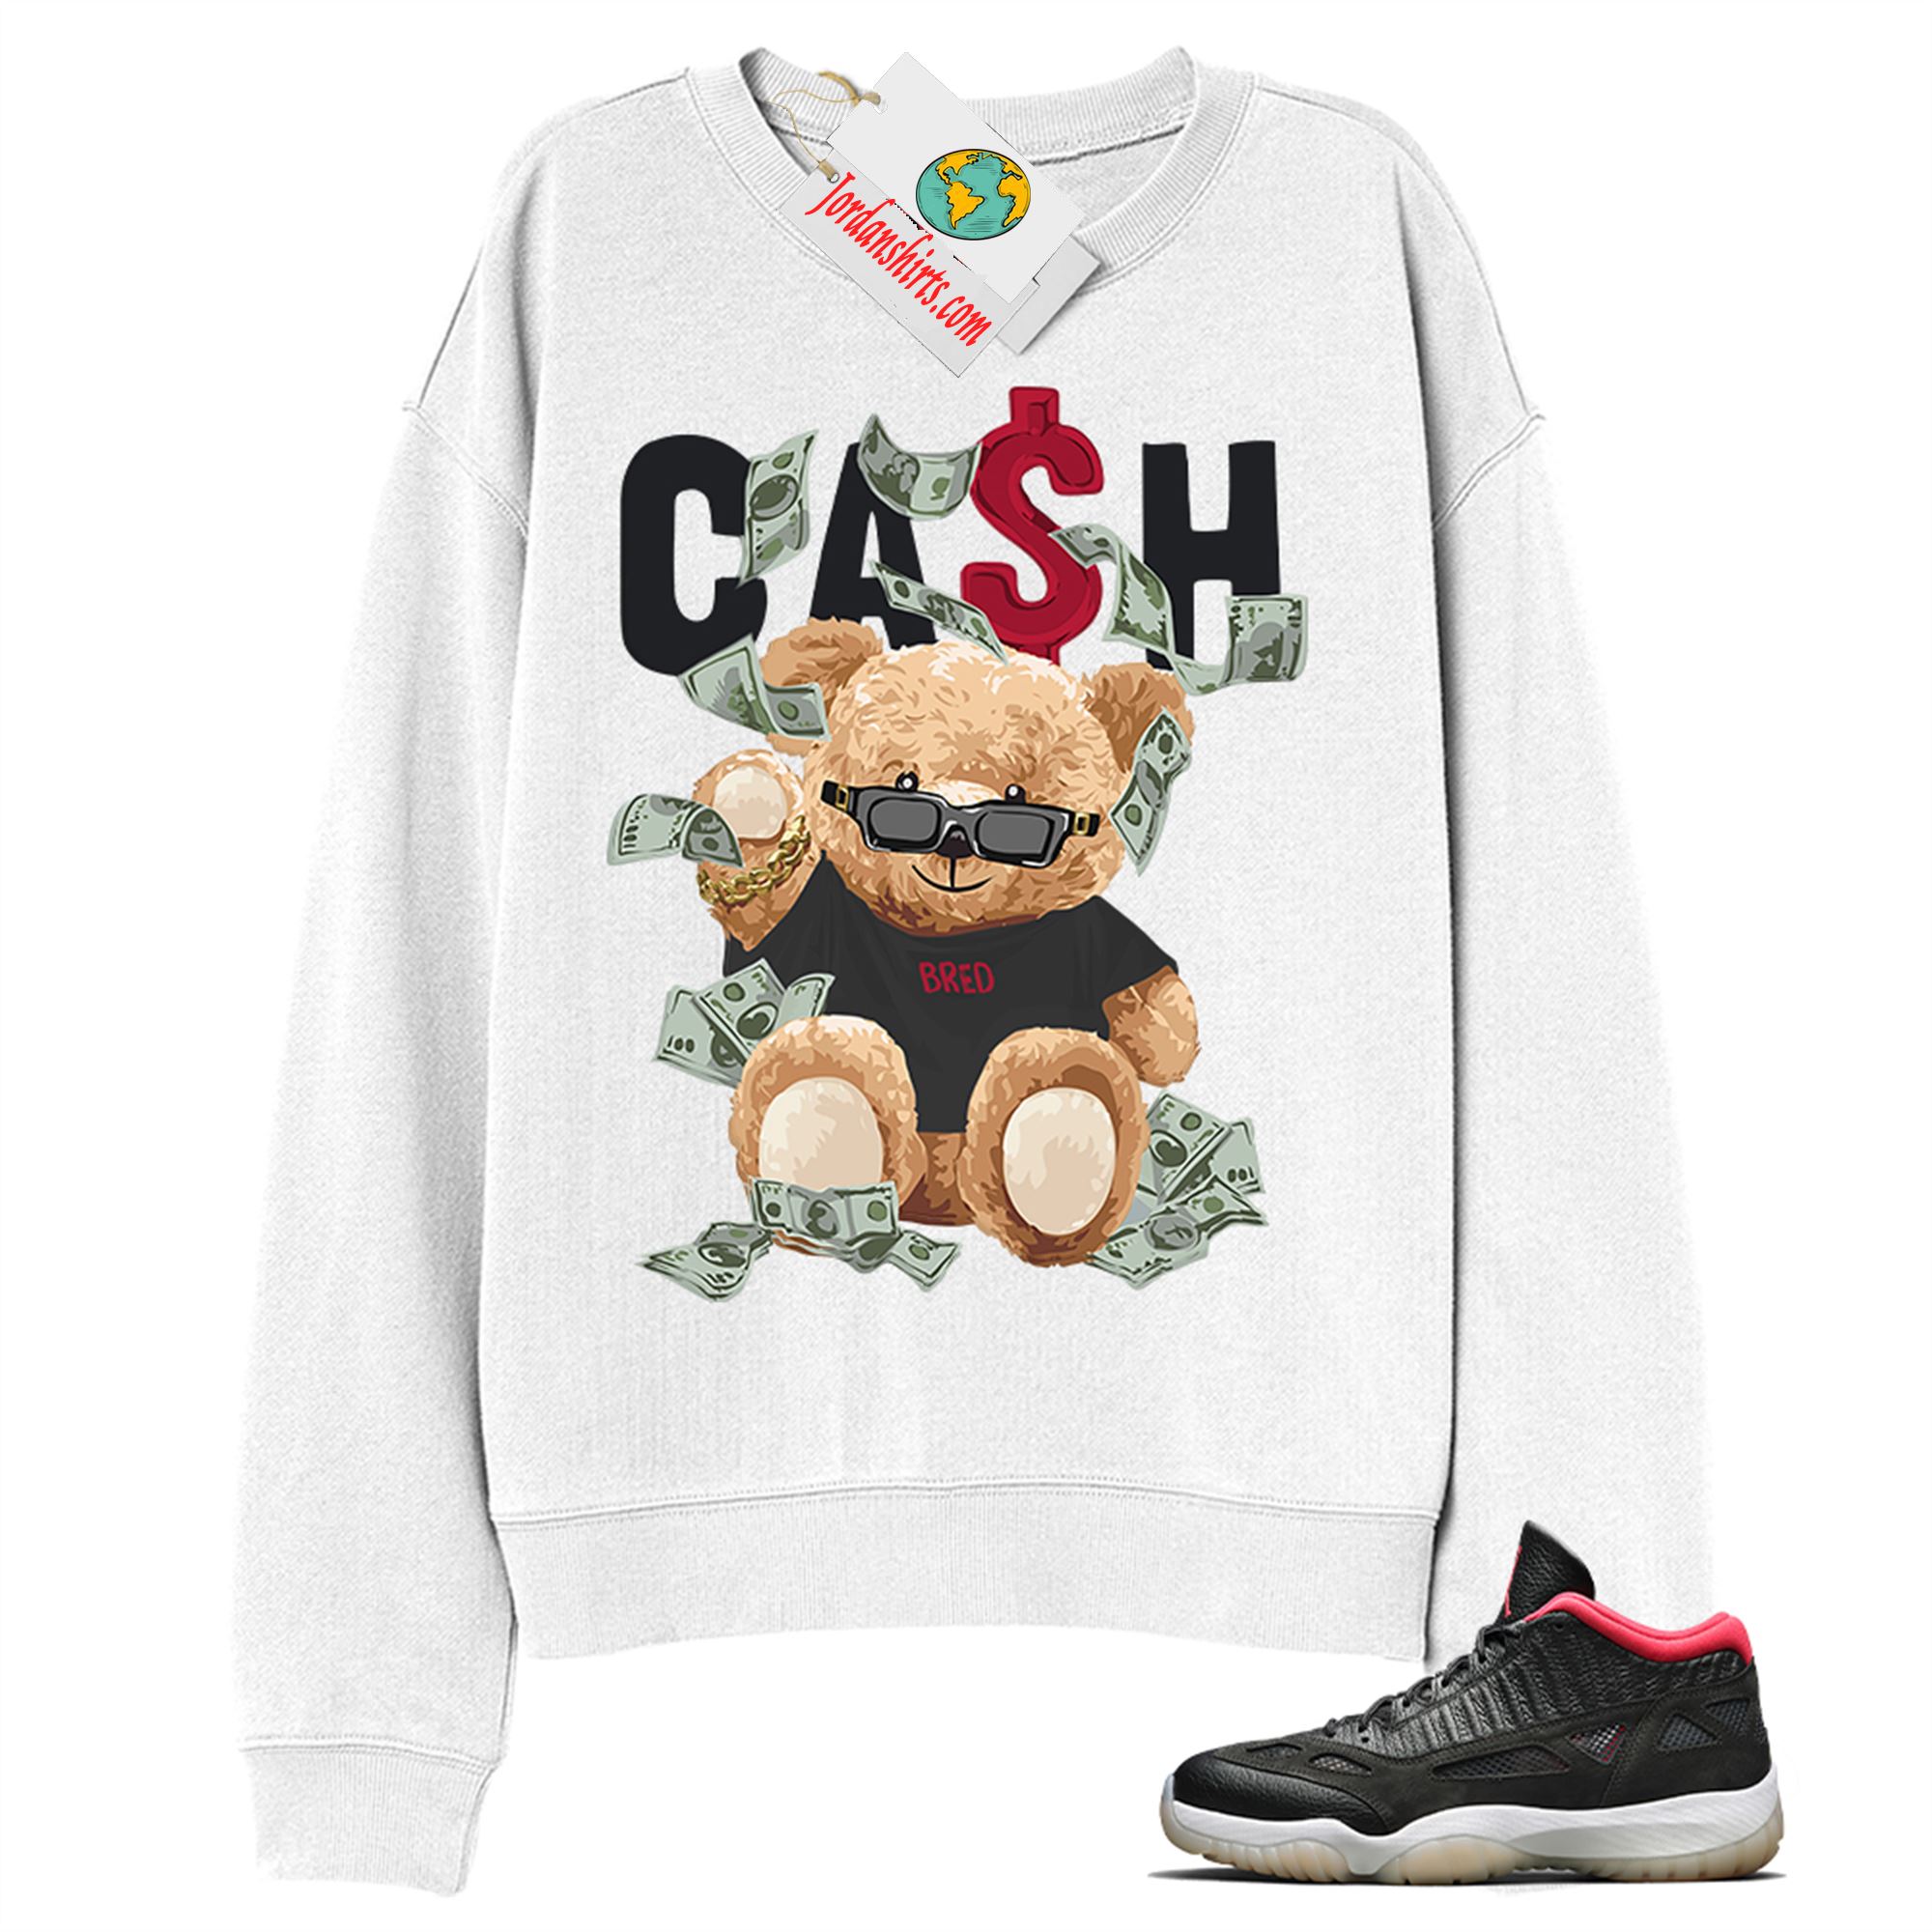 Jordan 11 Sweatshirt, Cash Teddy Bear In Sunglasses White Sweatshirt Air Jordan 11 Bred 11s Plus Size Up To 5xl